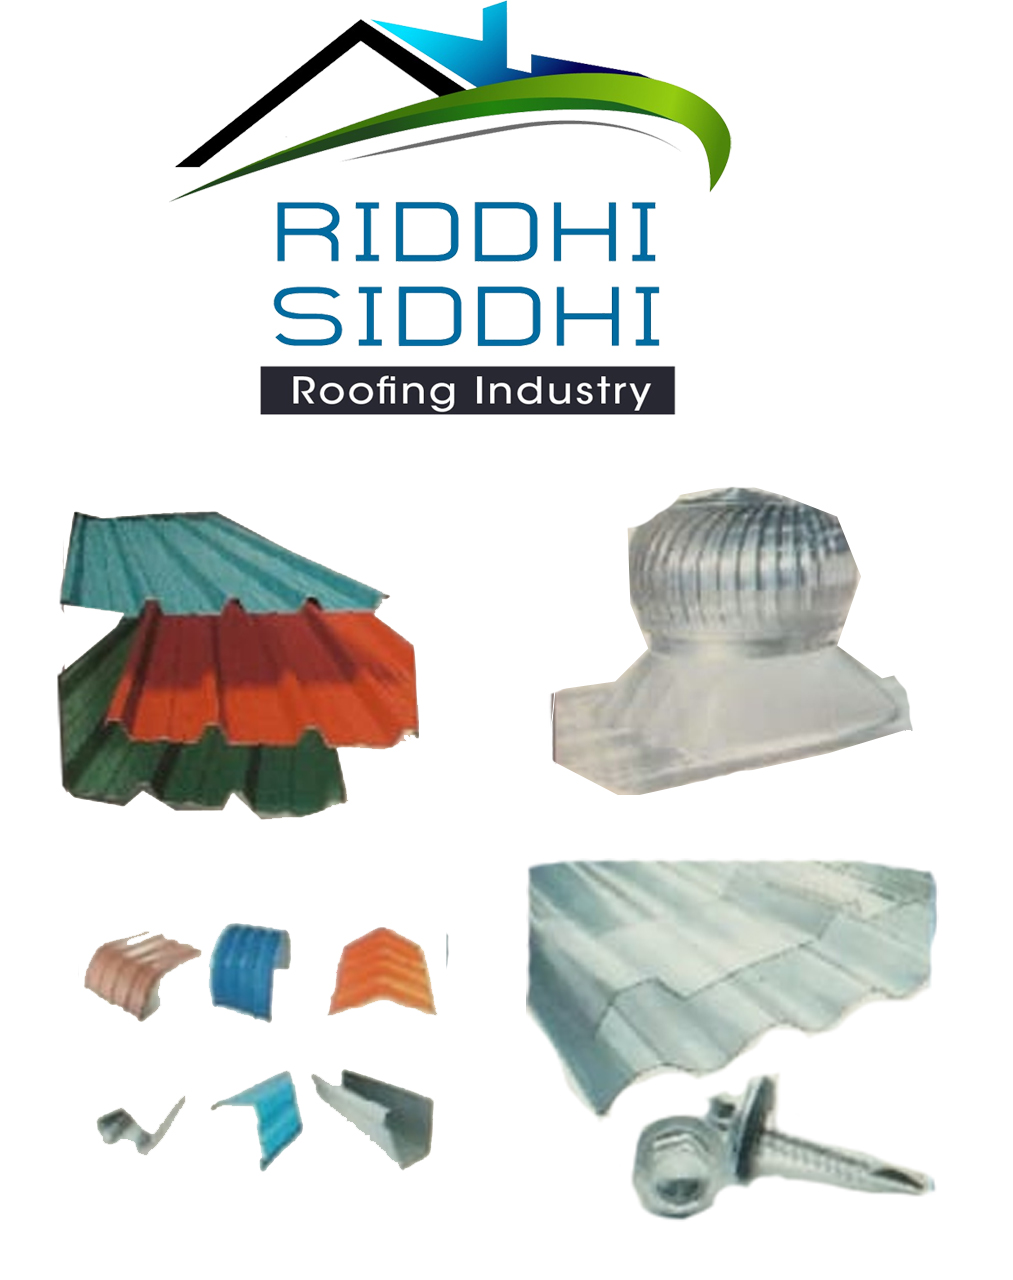 RIDDHI SIDDHI ROOFING INDUSTRY | SolapurMall.com